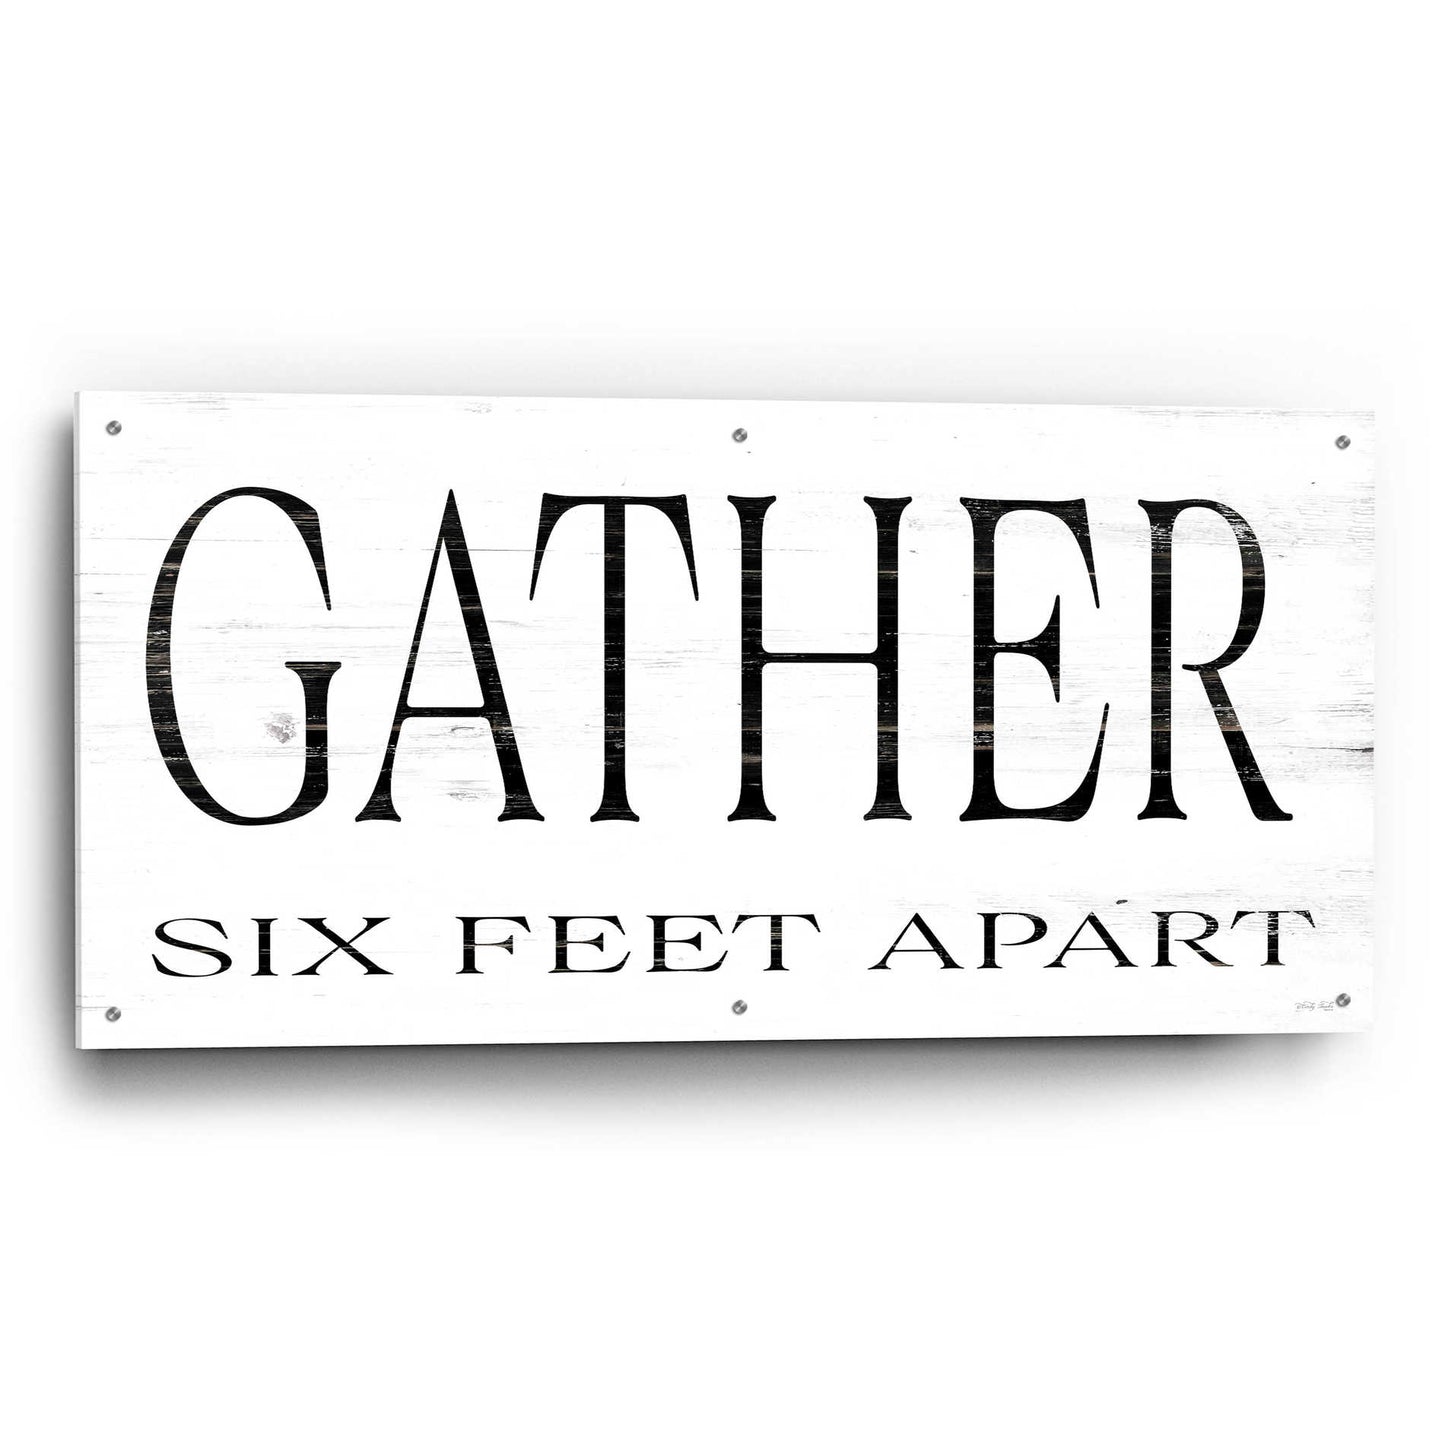 Epic Art 'Gather Six Feet Apart' by Cindy Jacobs, Acrylic Glass Wall Art,48x24